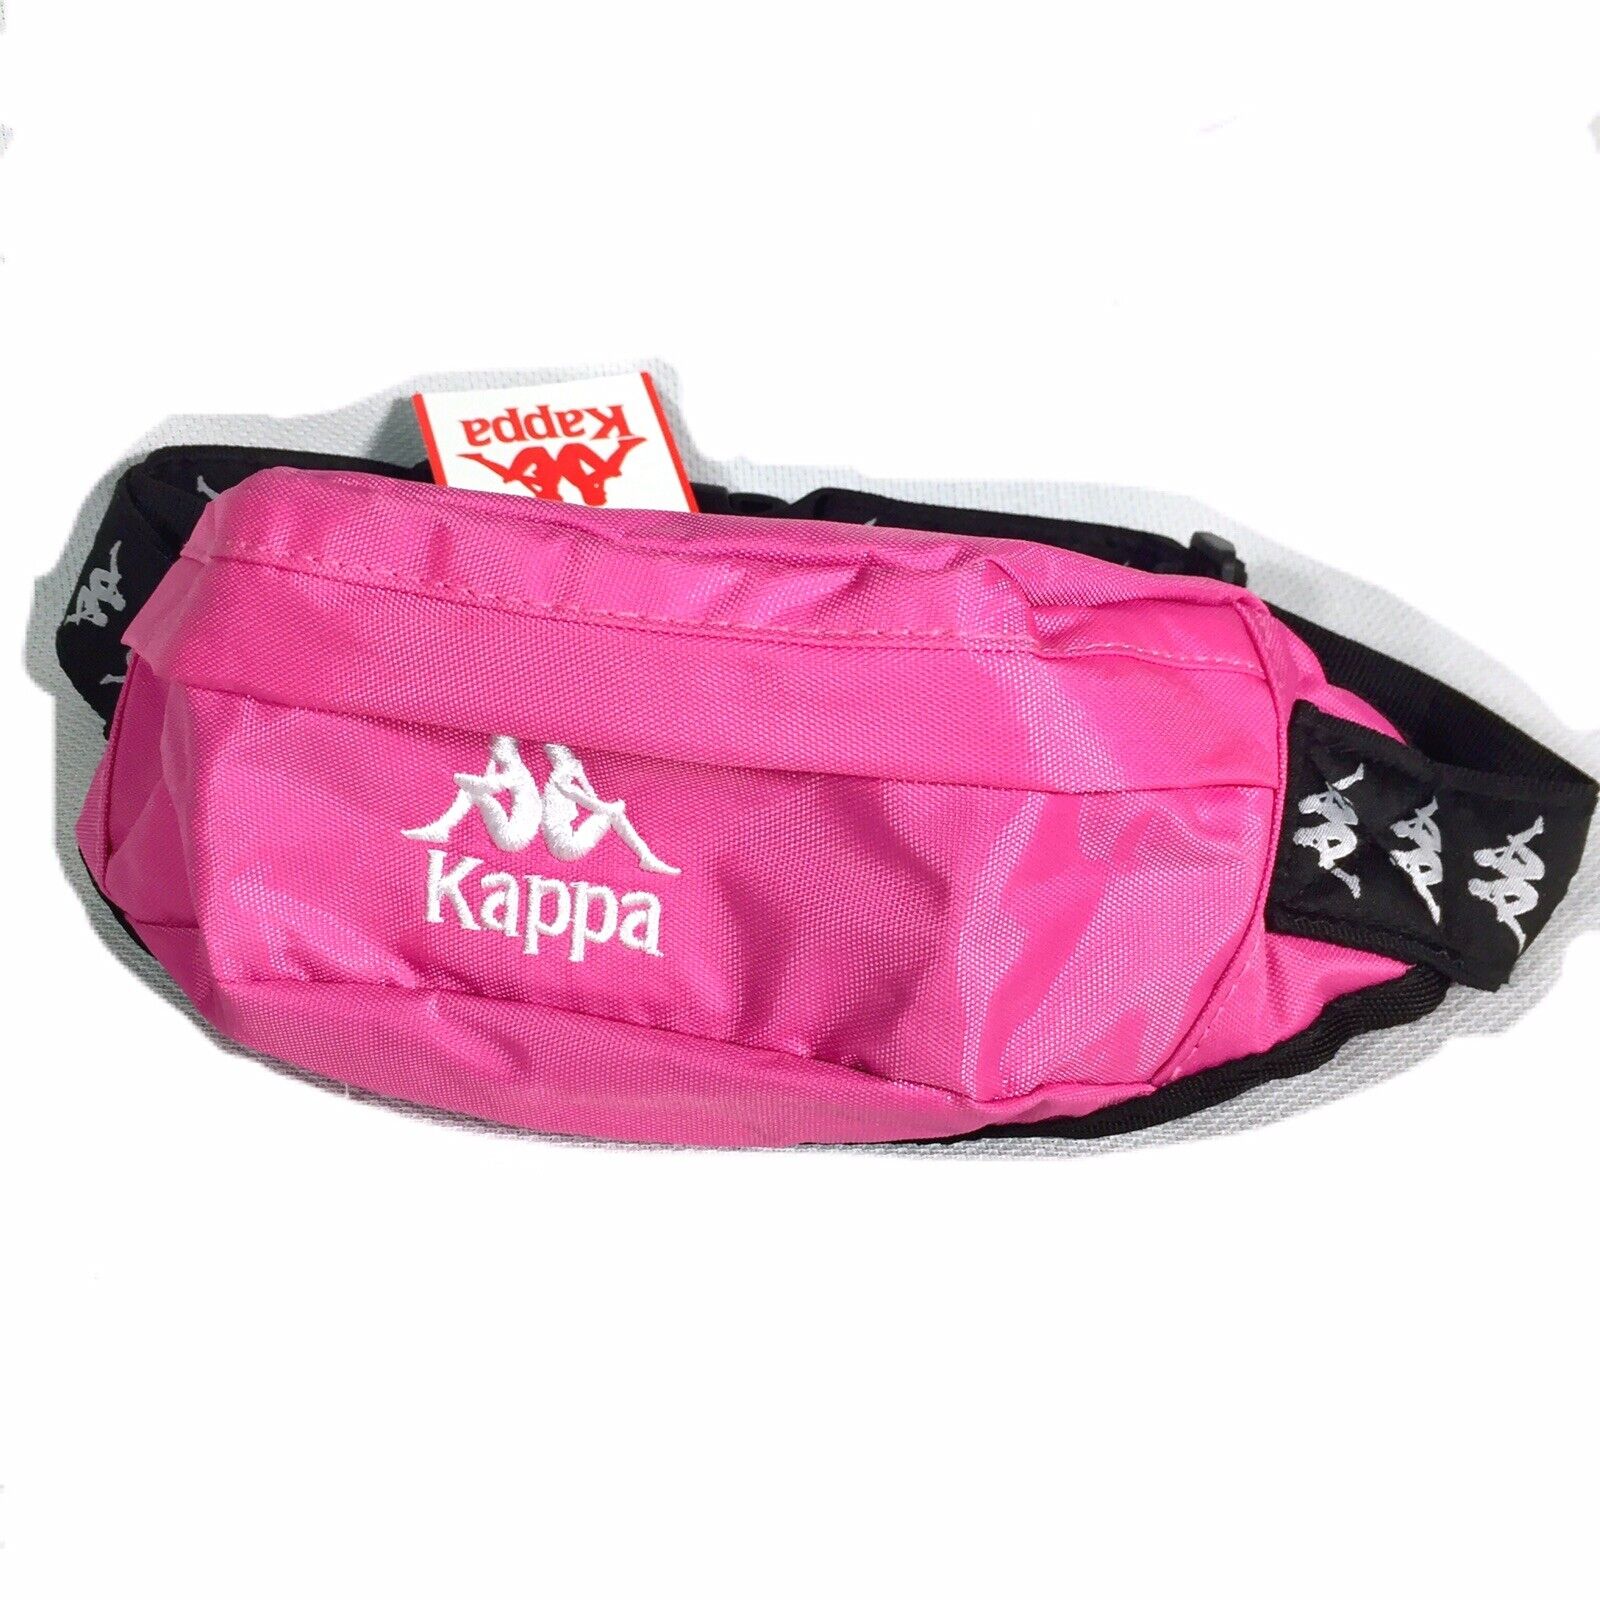 Kappa Neon Pink Fanny Pack 222 Anais Sling Small Bubblegum New | eBay